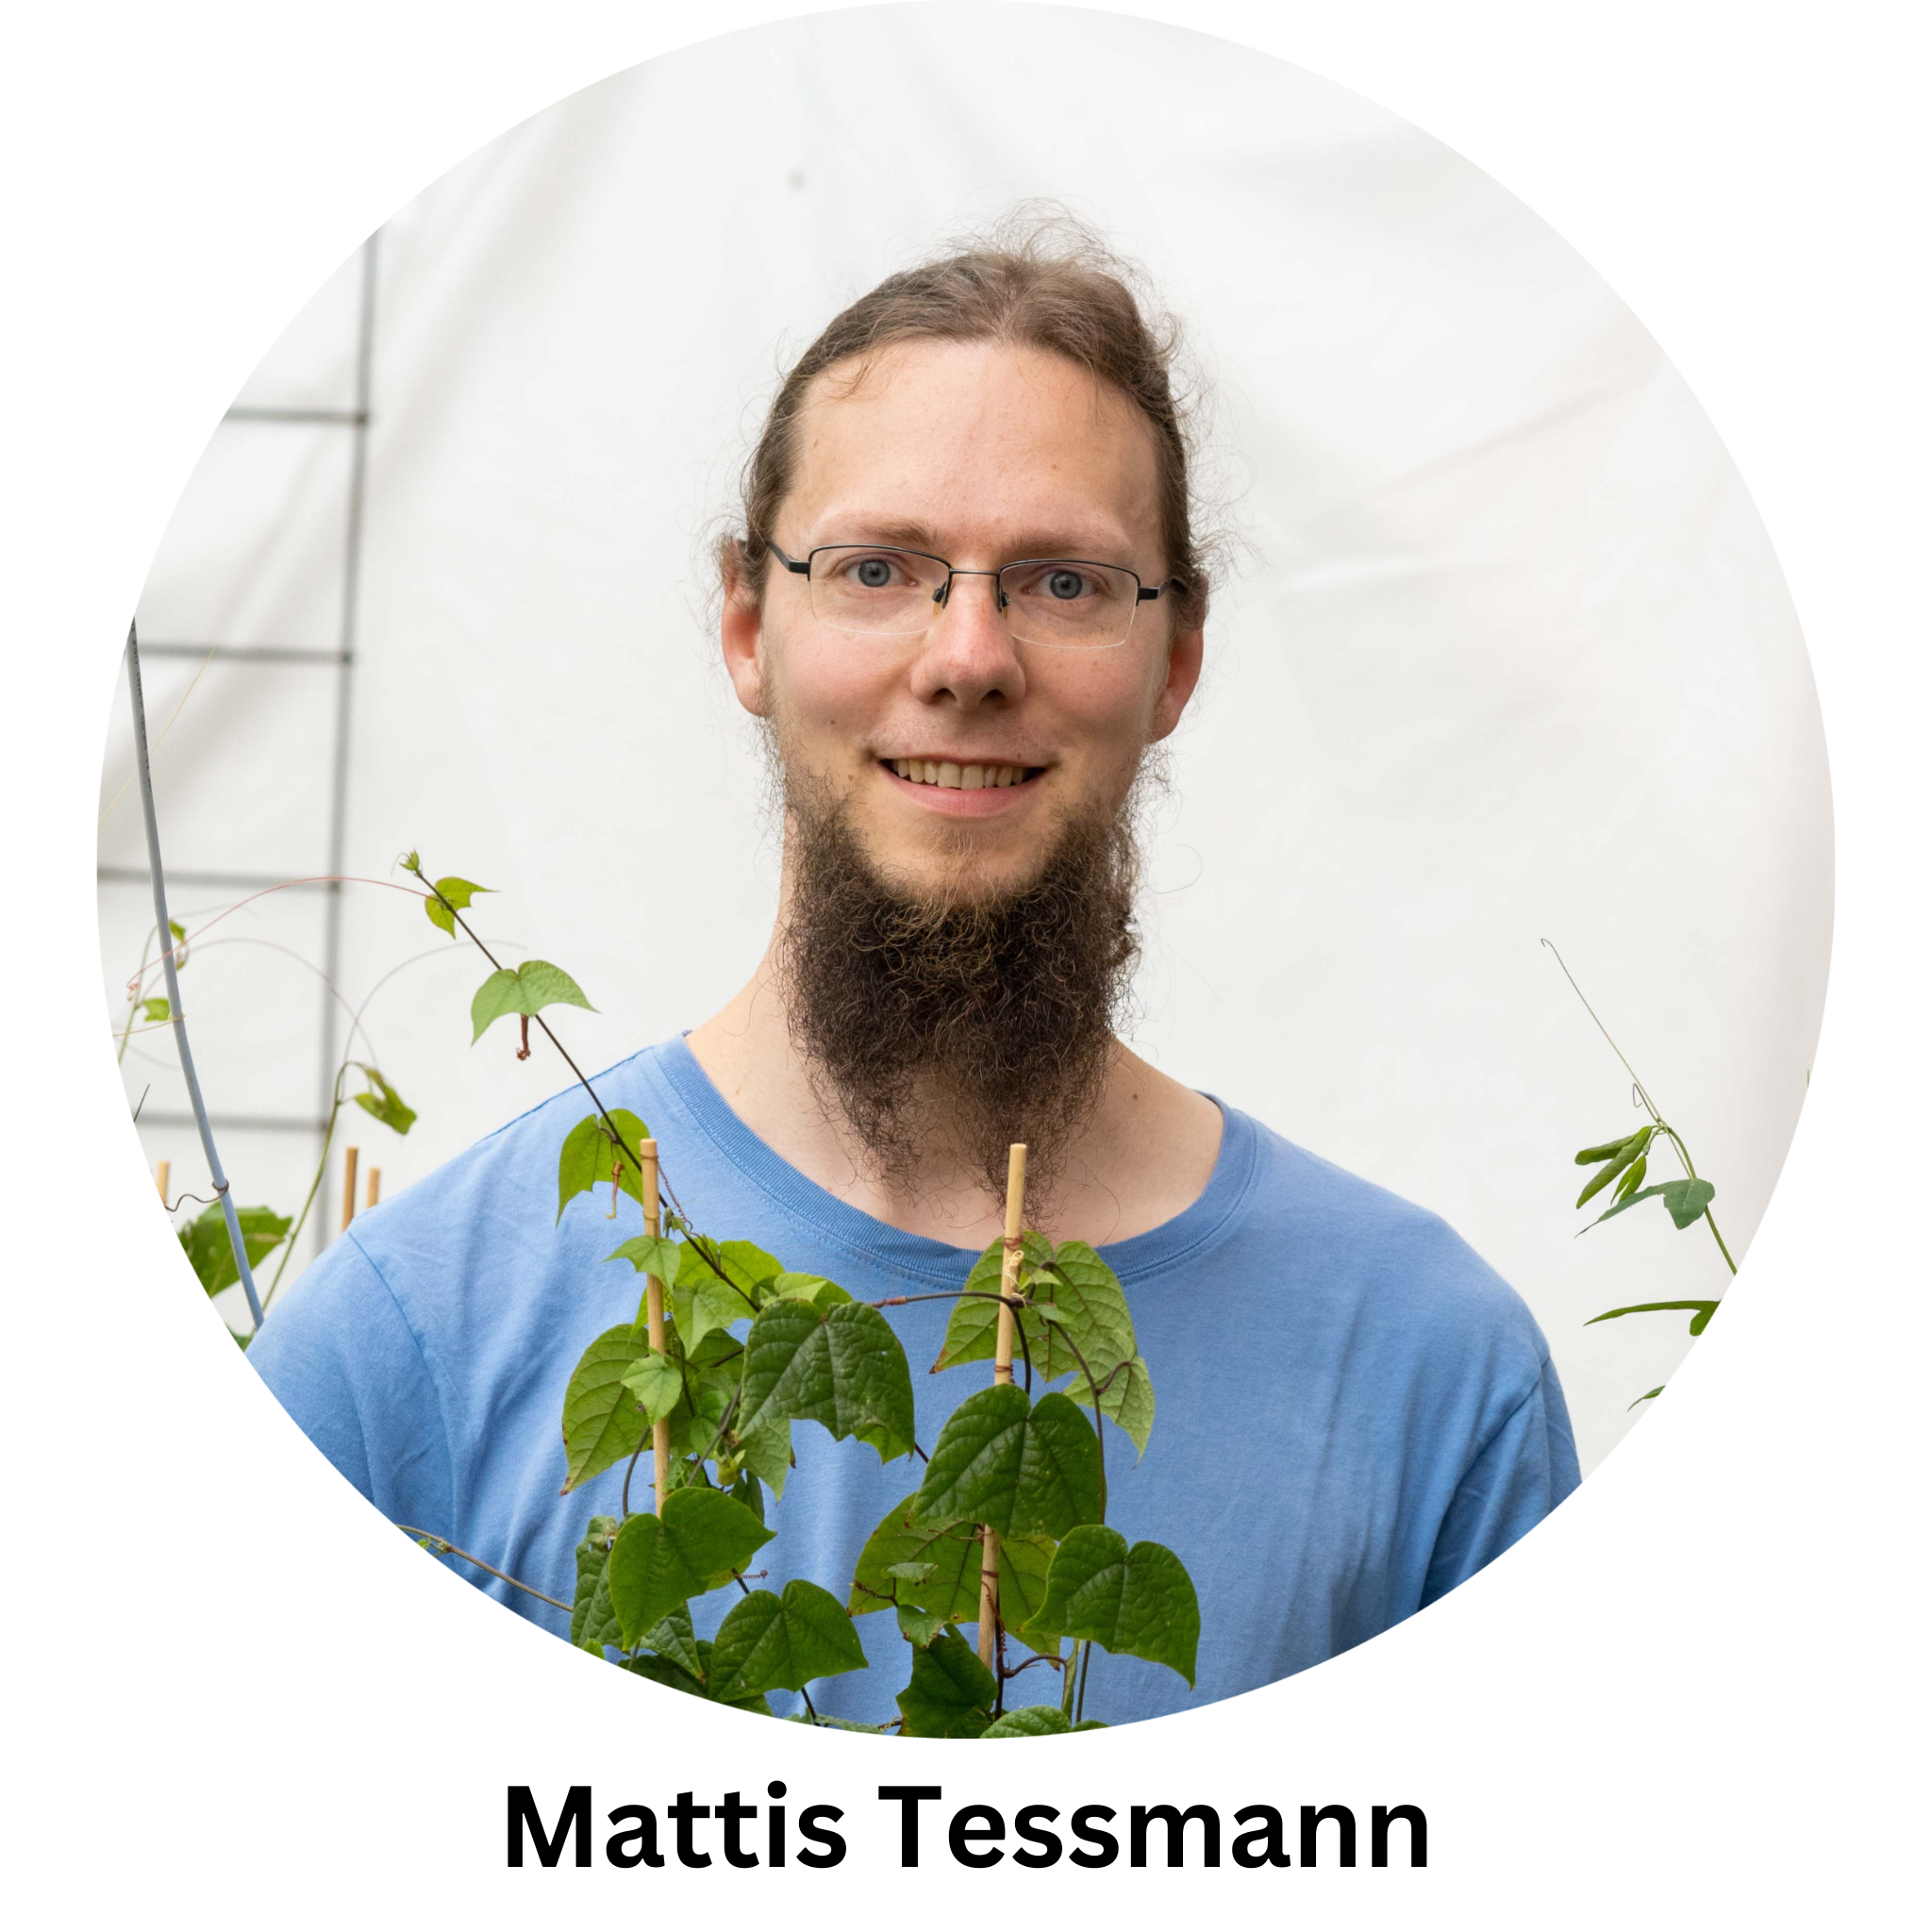 Mattis Tessmann